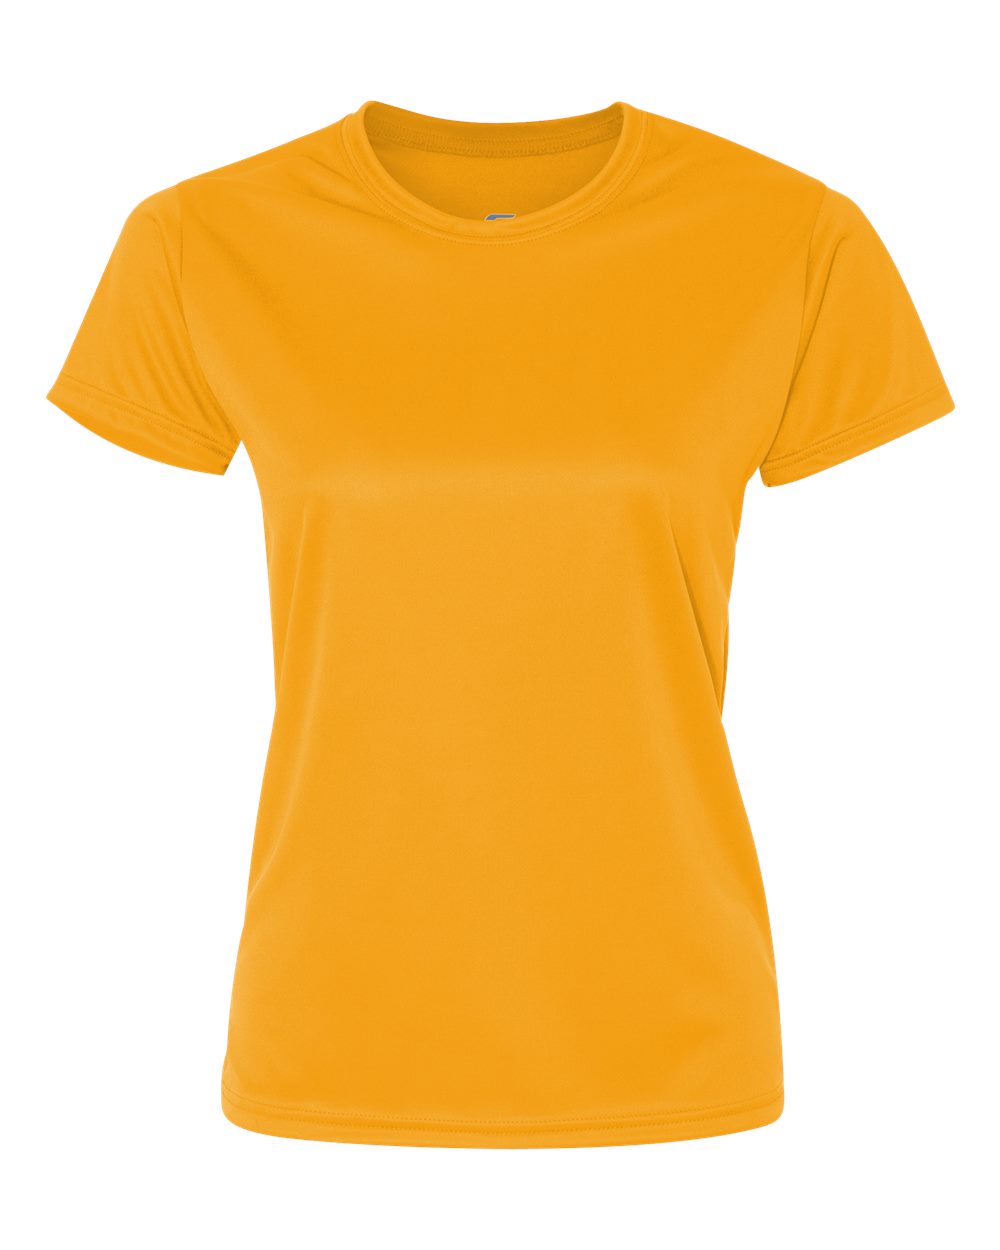 C2 Sport - Women's Performance Short Sleeve T-Shirt - 5600 - Century  Marketing, Inc.